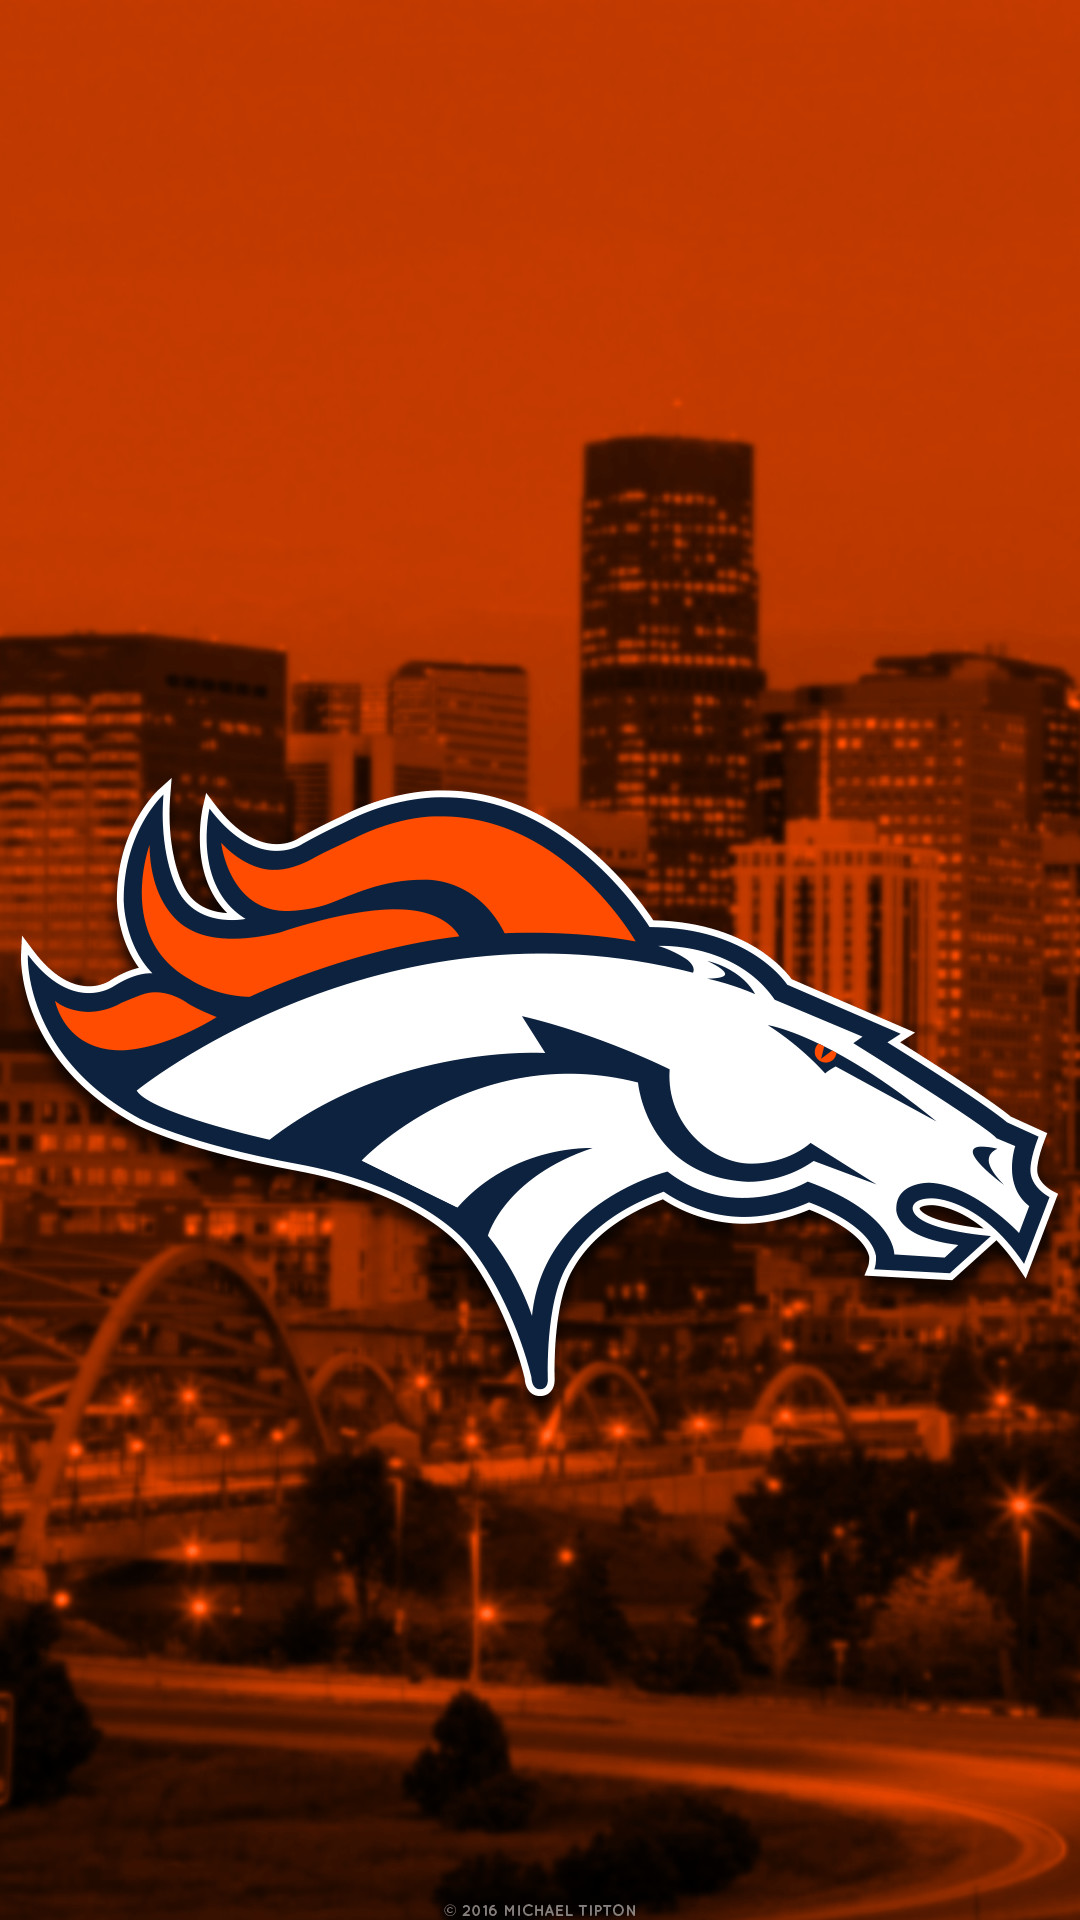 Denver Broncos Wallpaper For Android Image